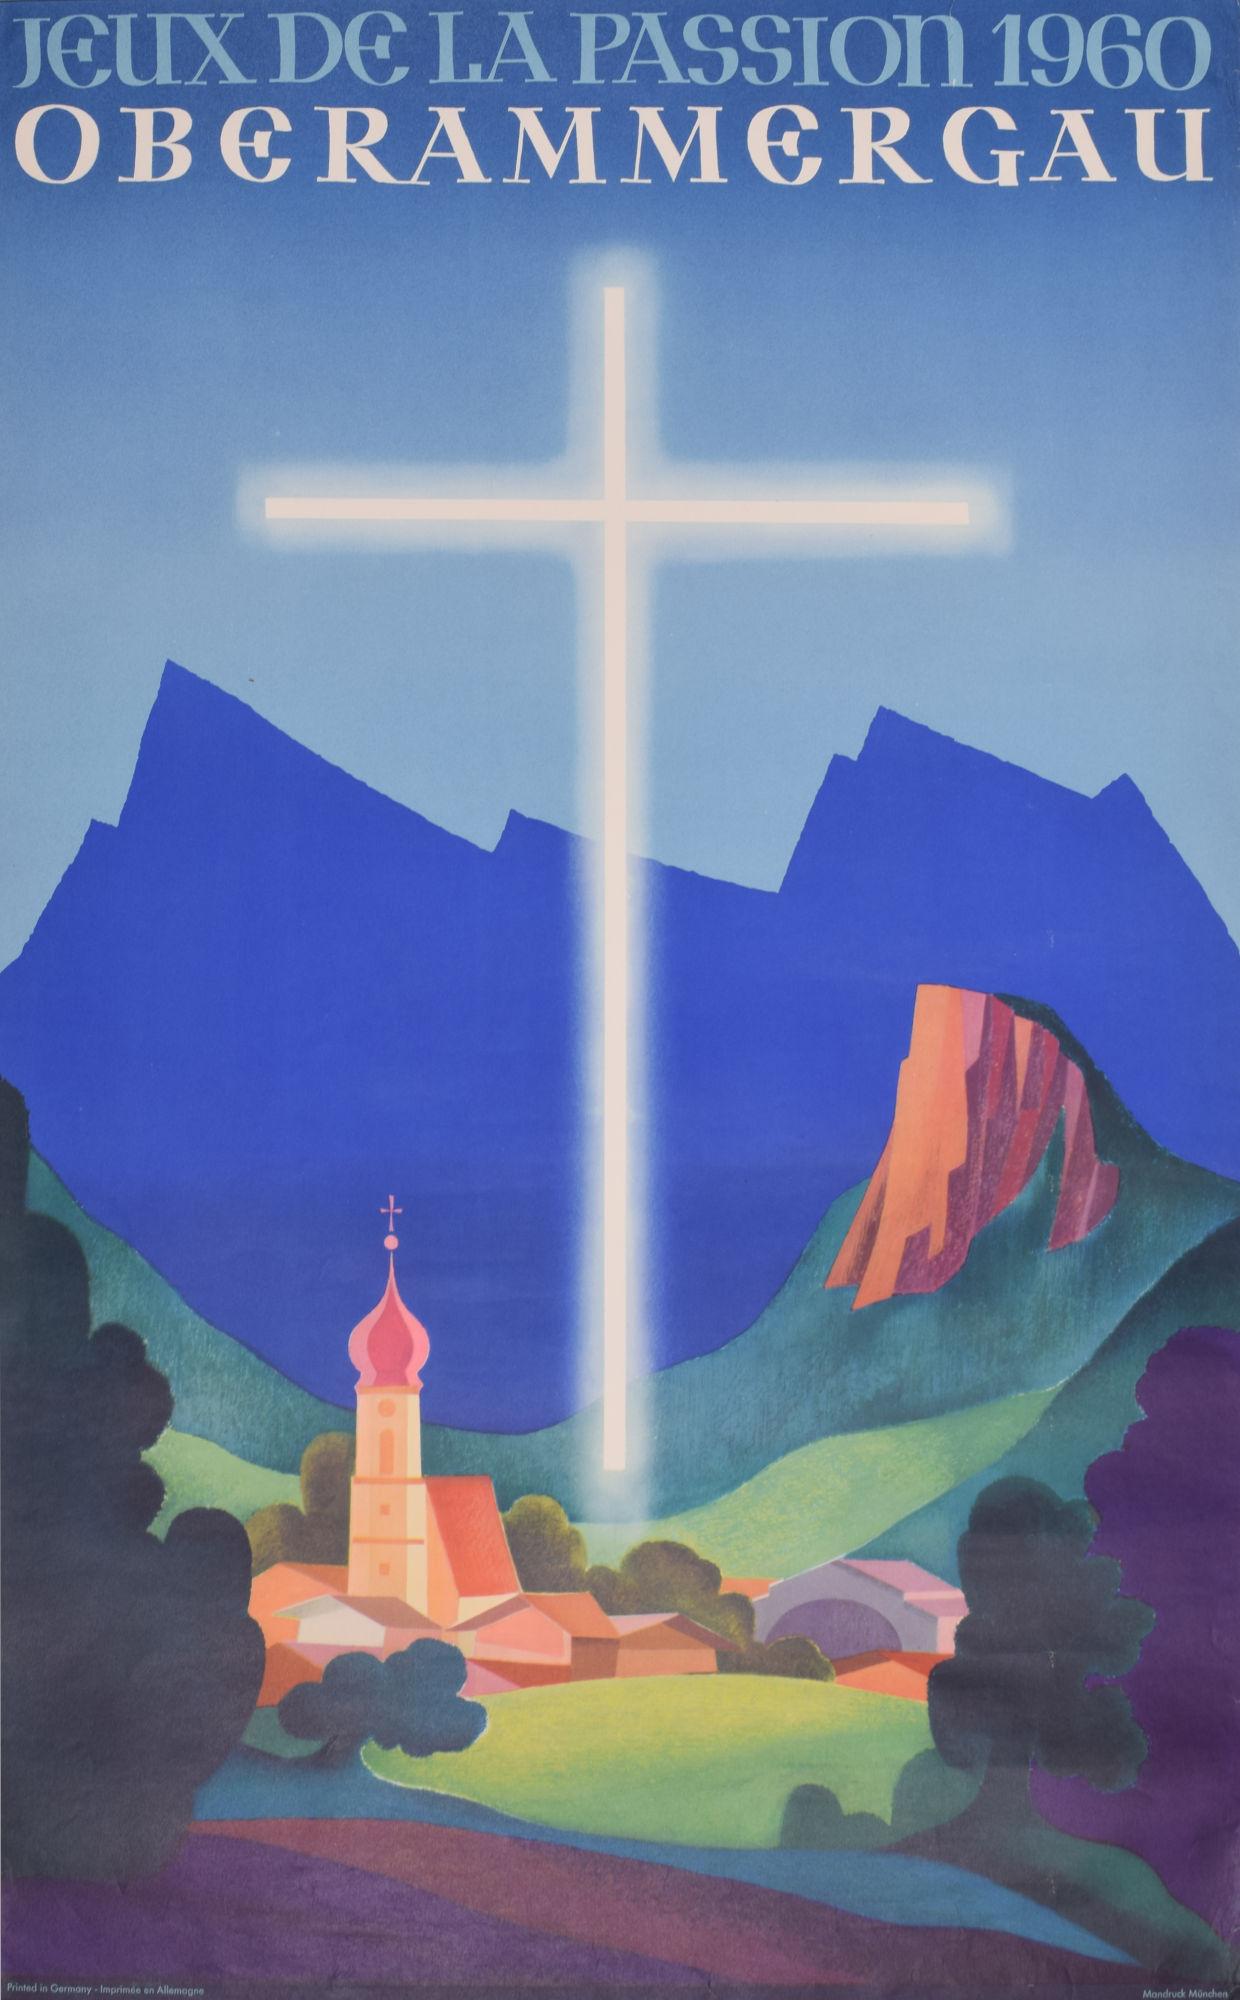 Unknown Landscape Print - Oberammergau, Germany 1960 original vintage Passion Play poster